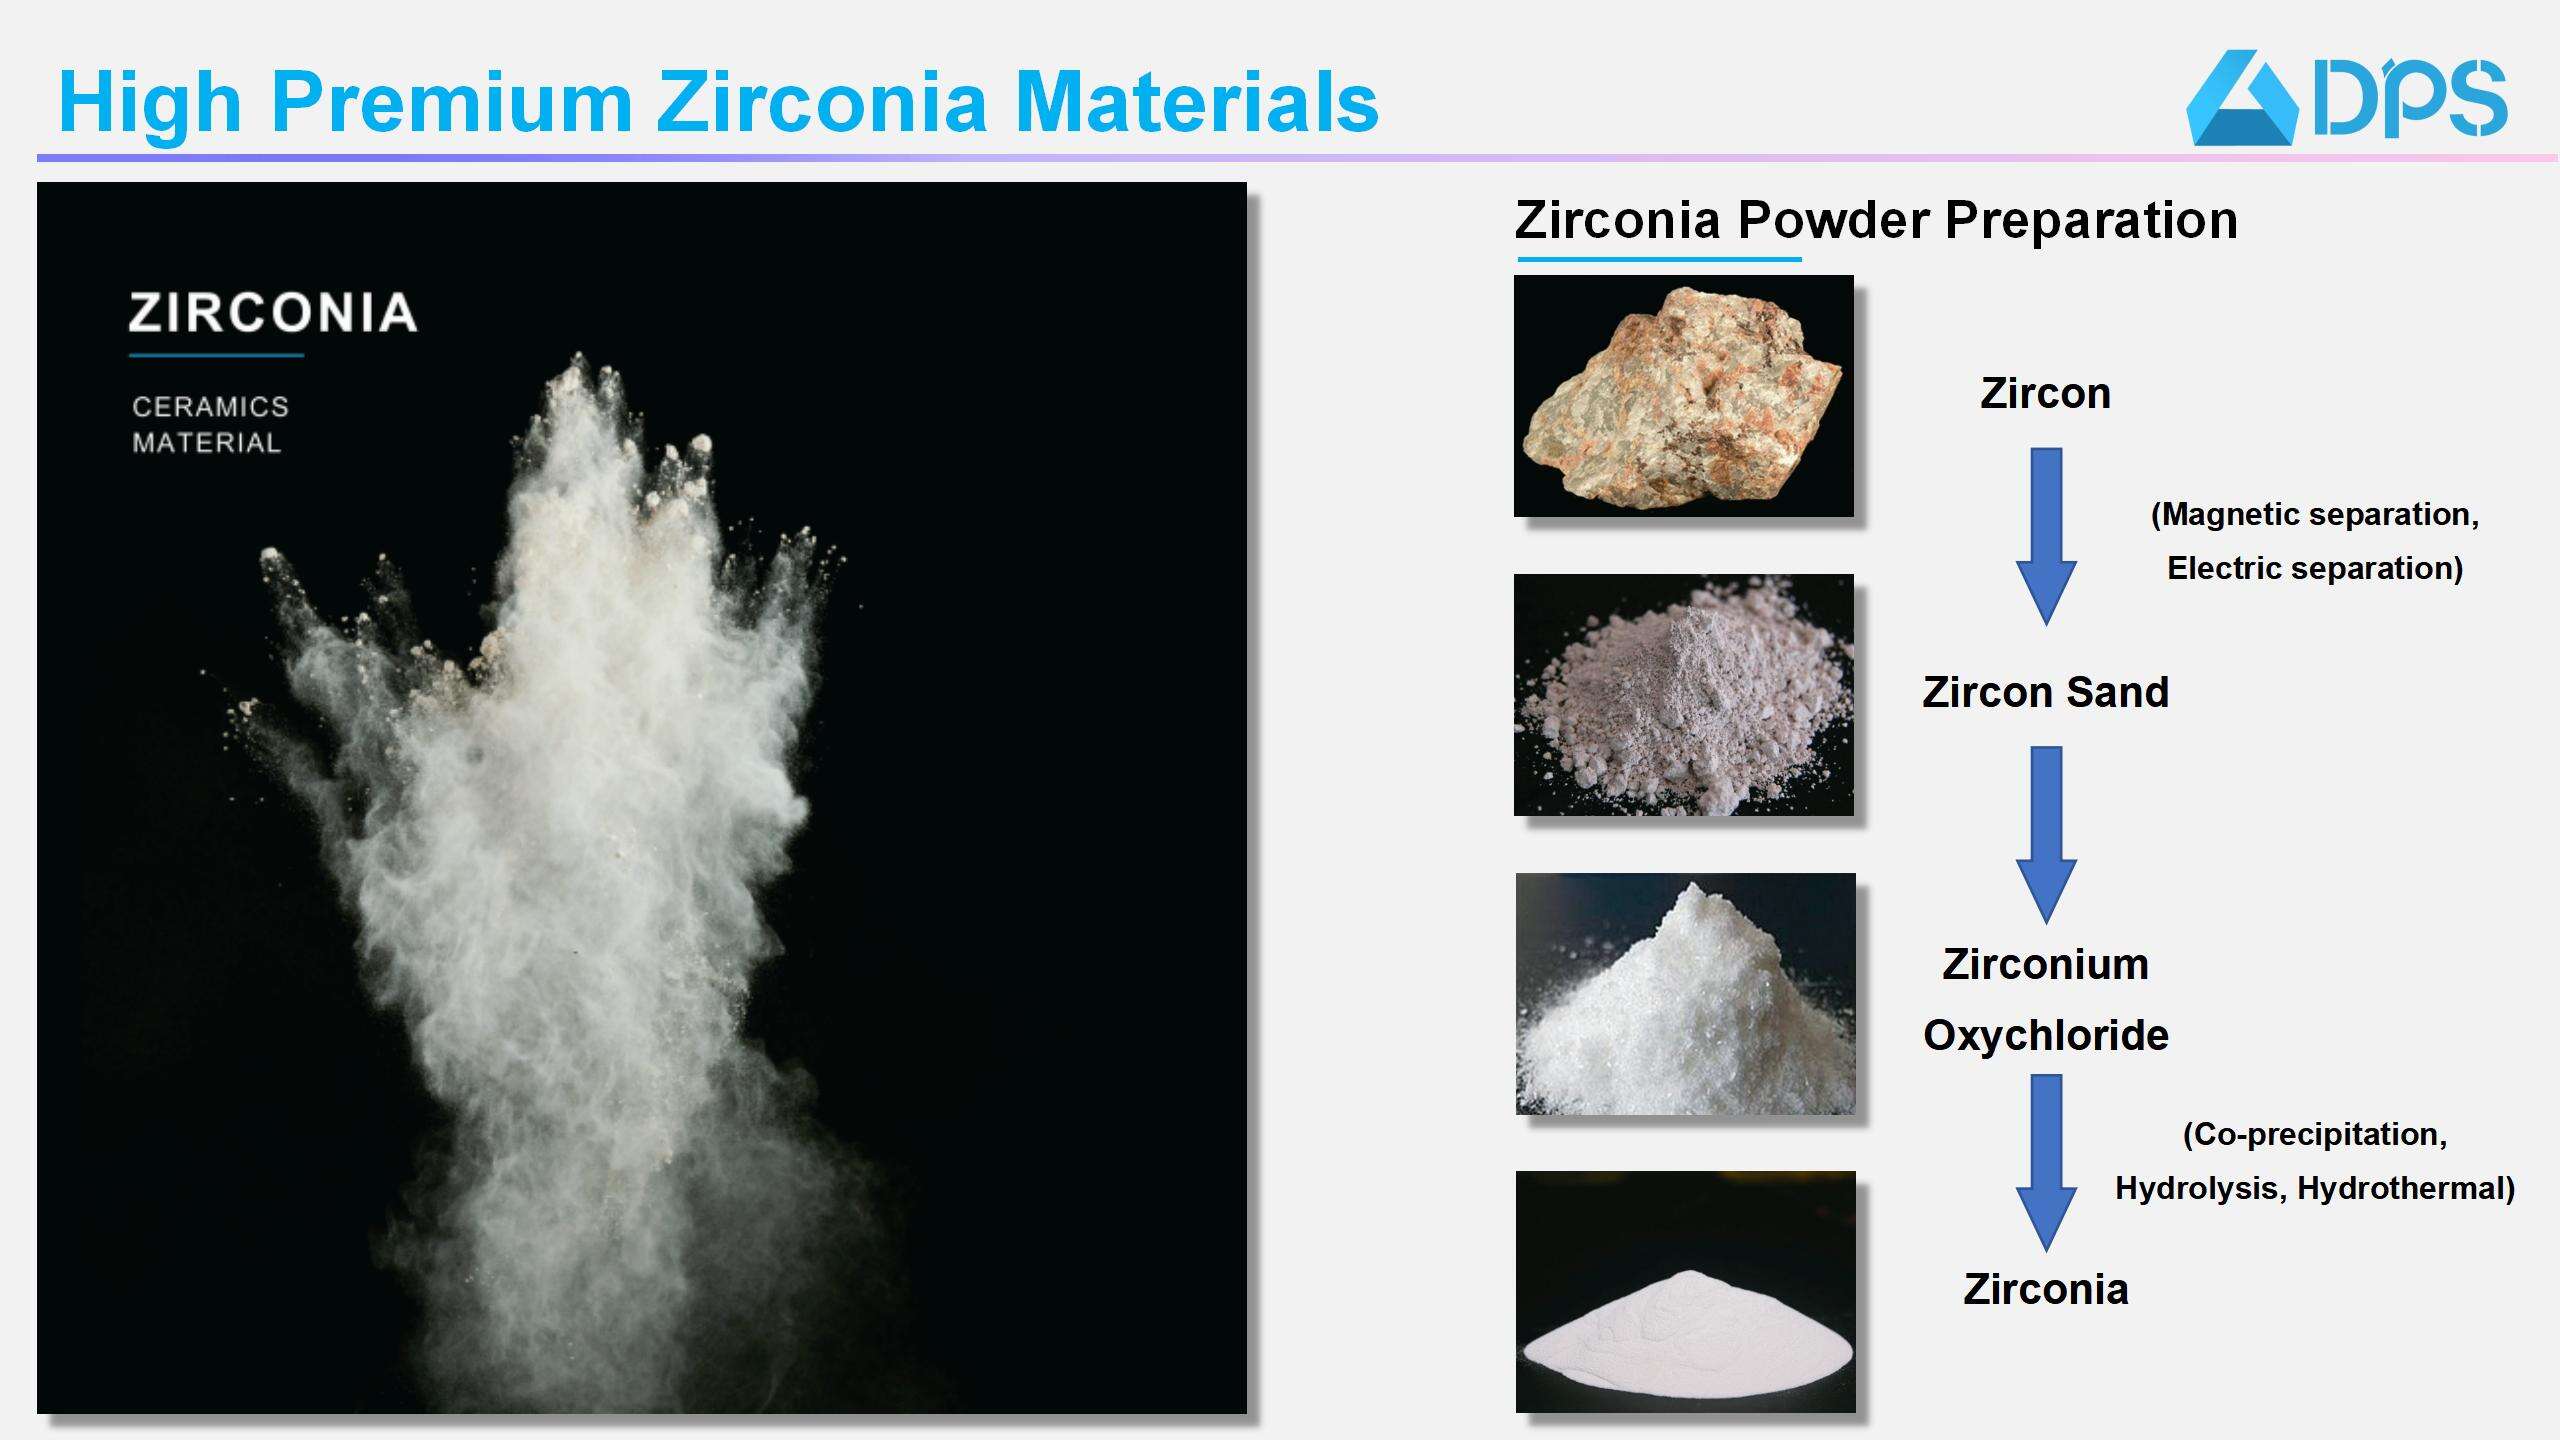 ST Dental Zirconia Block for zirconia crowns and bridges milling manufacture